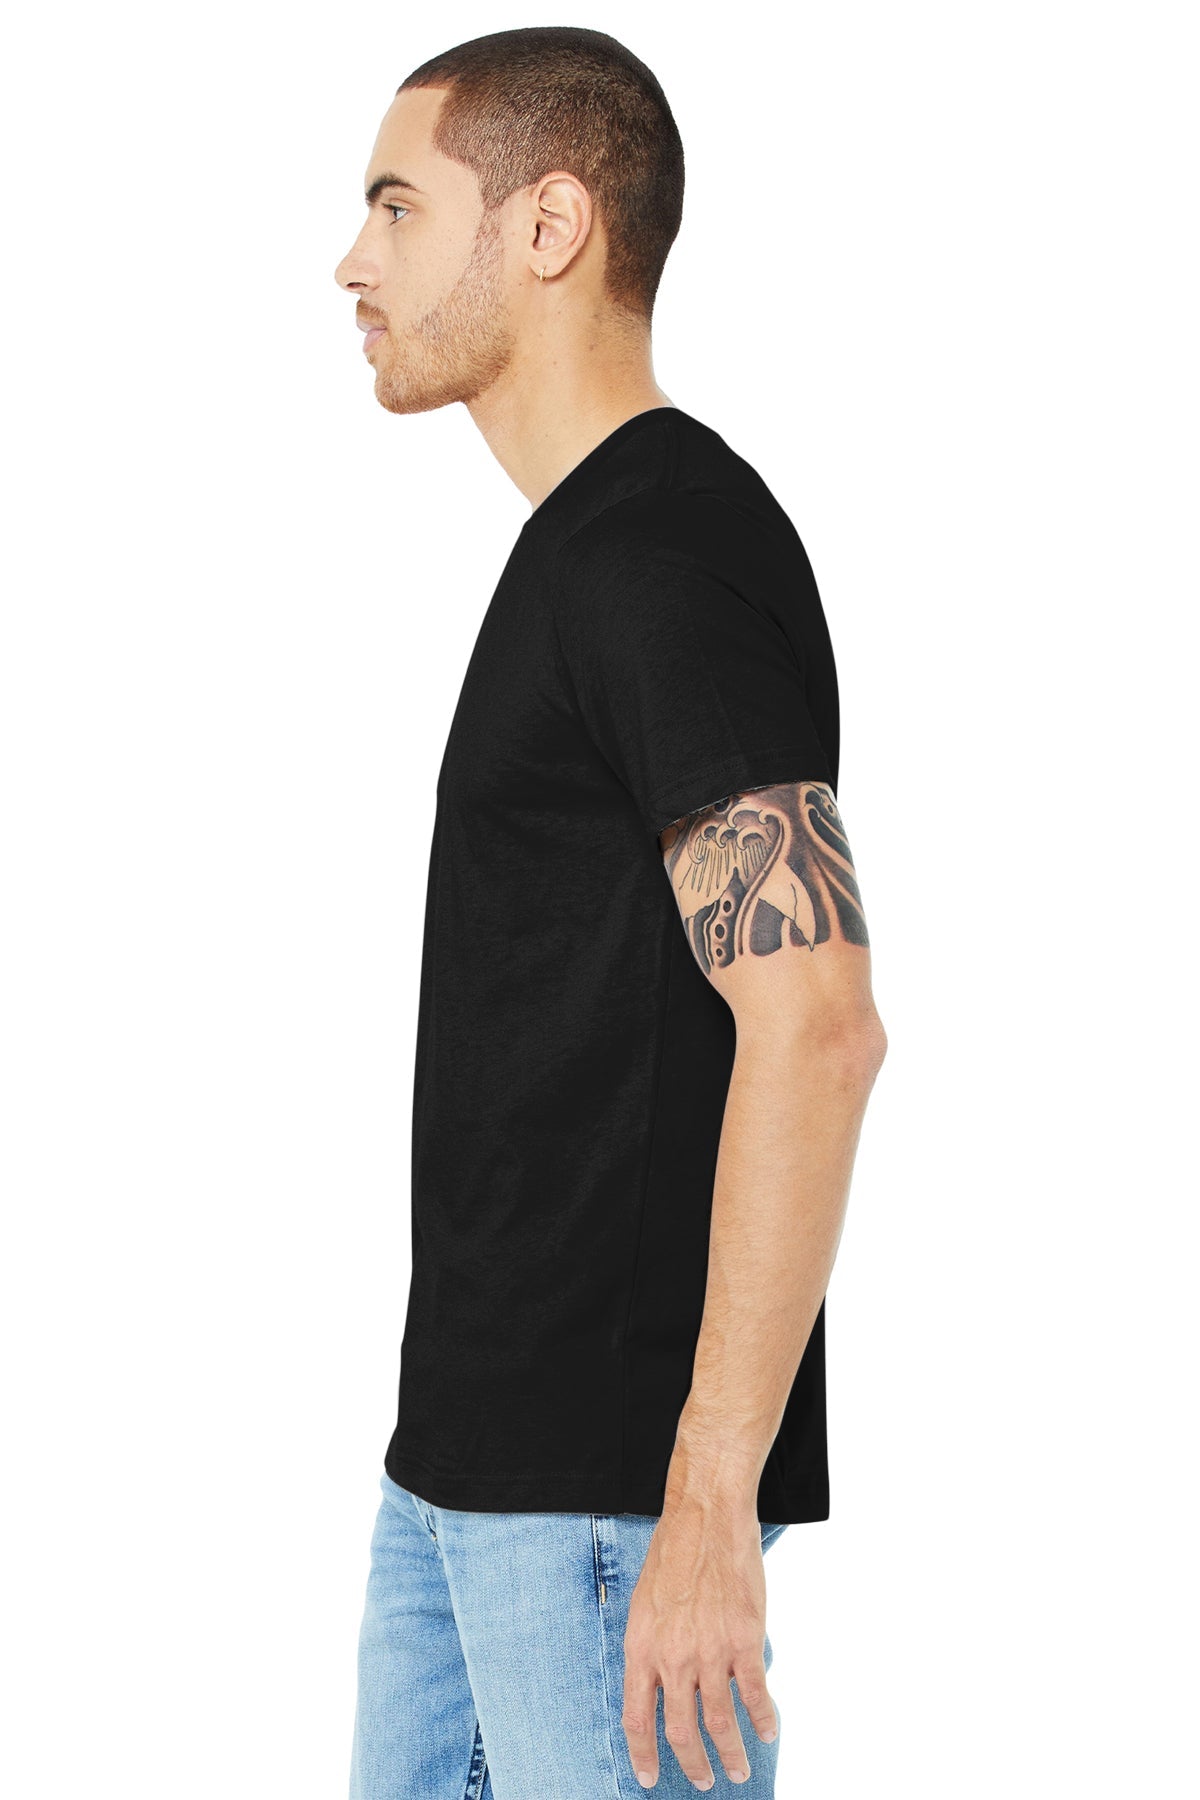 bella + canvas unisex jersey short sleeve t-shirt 3001c solid blk blend